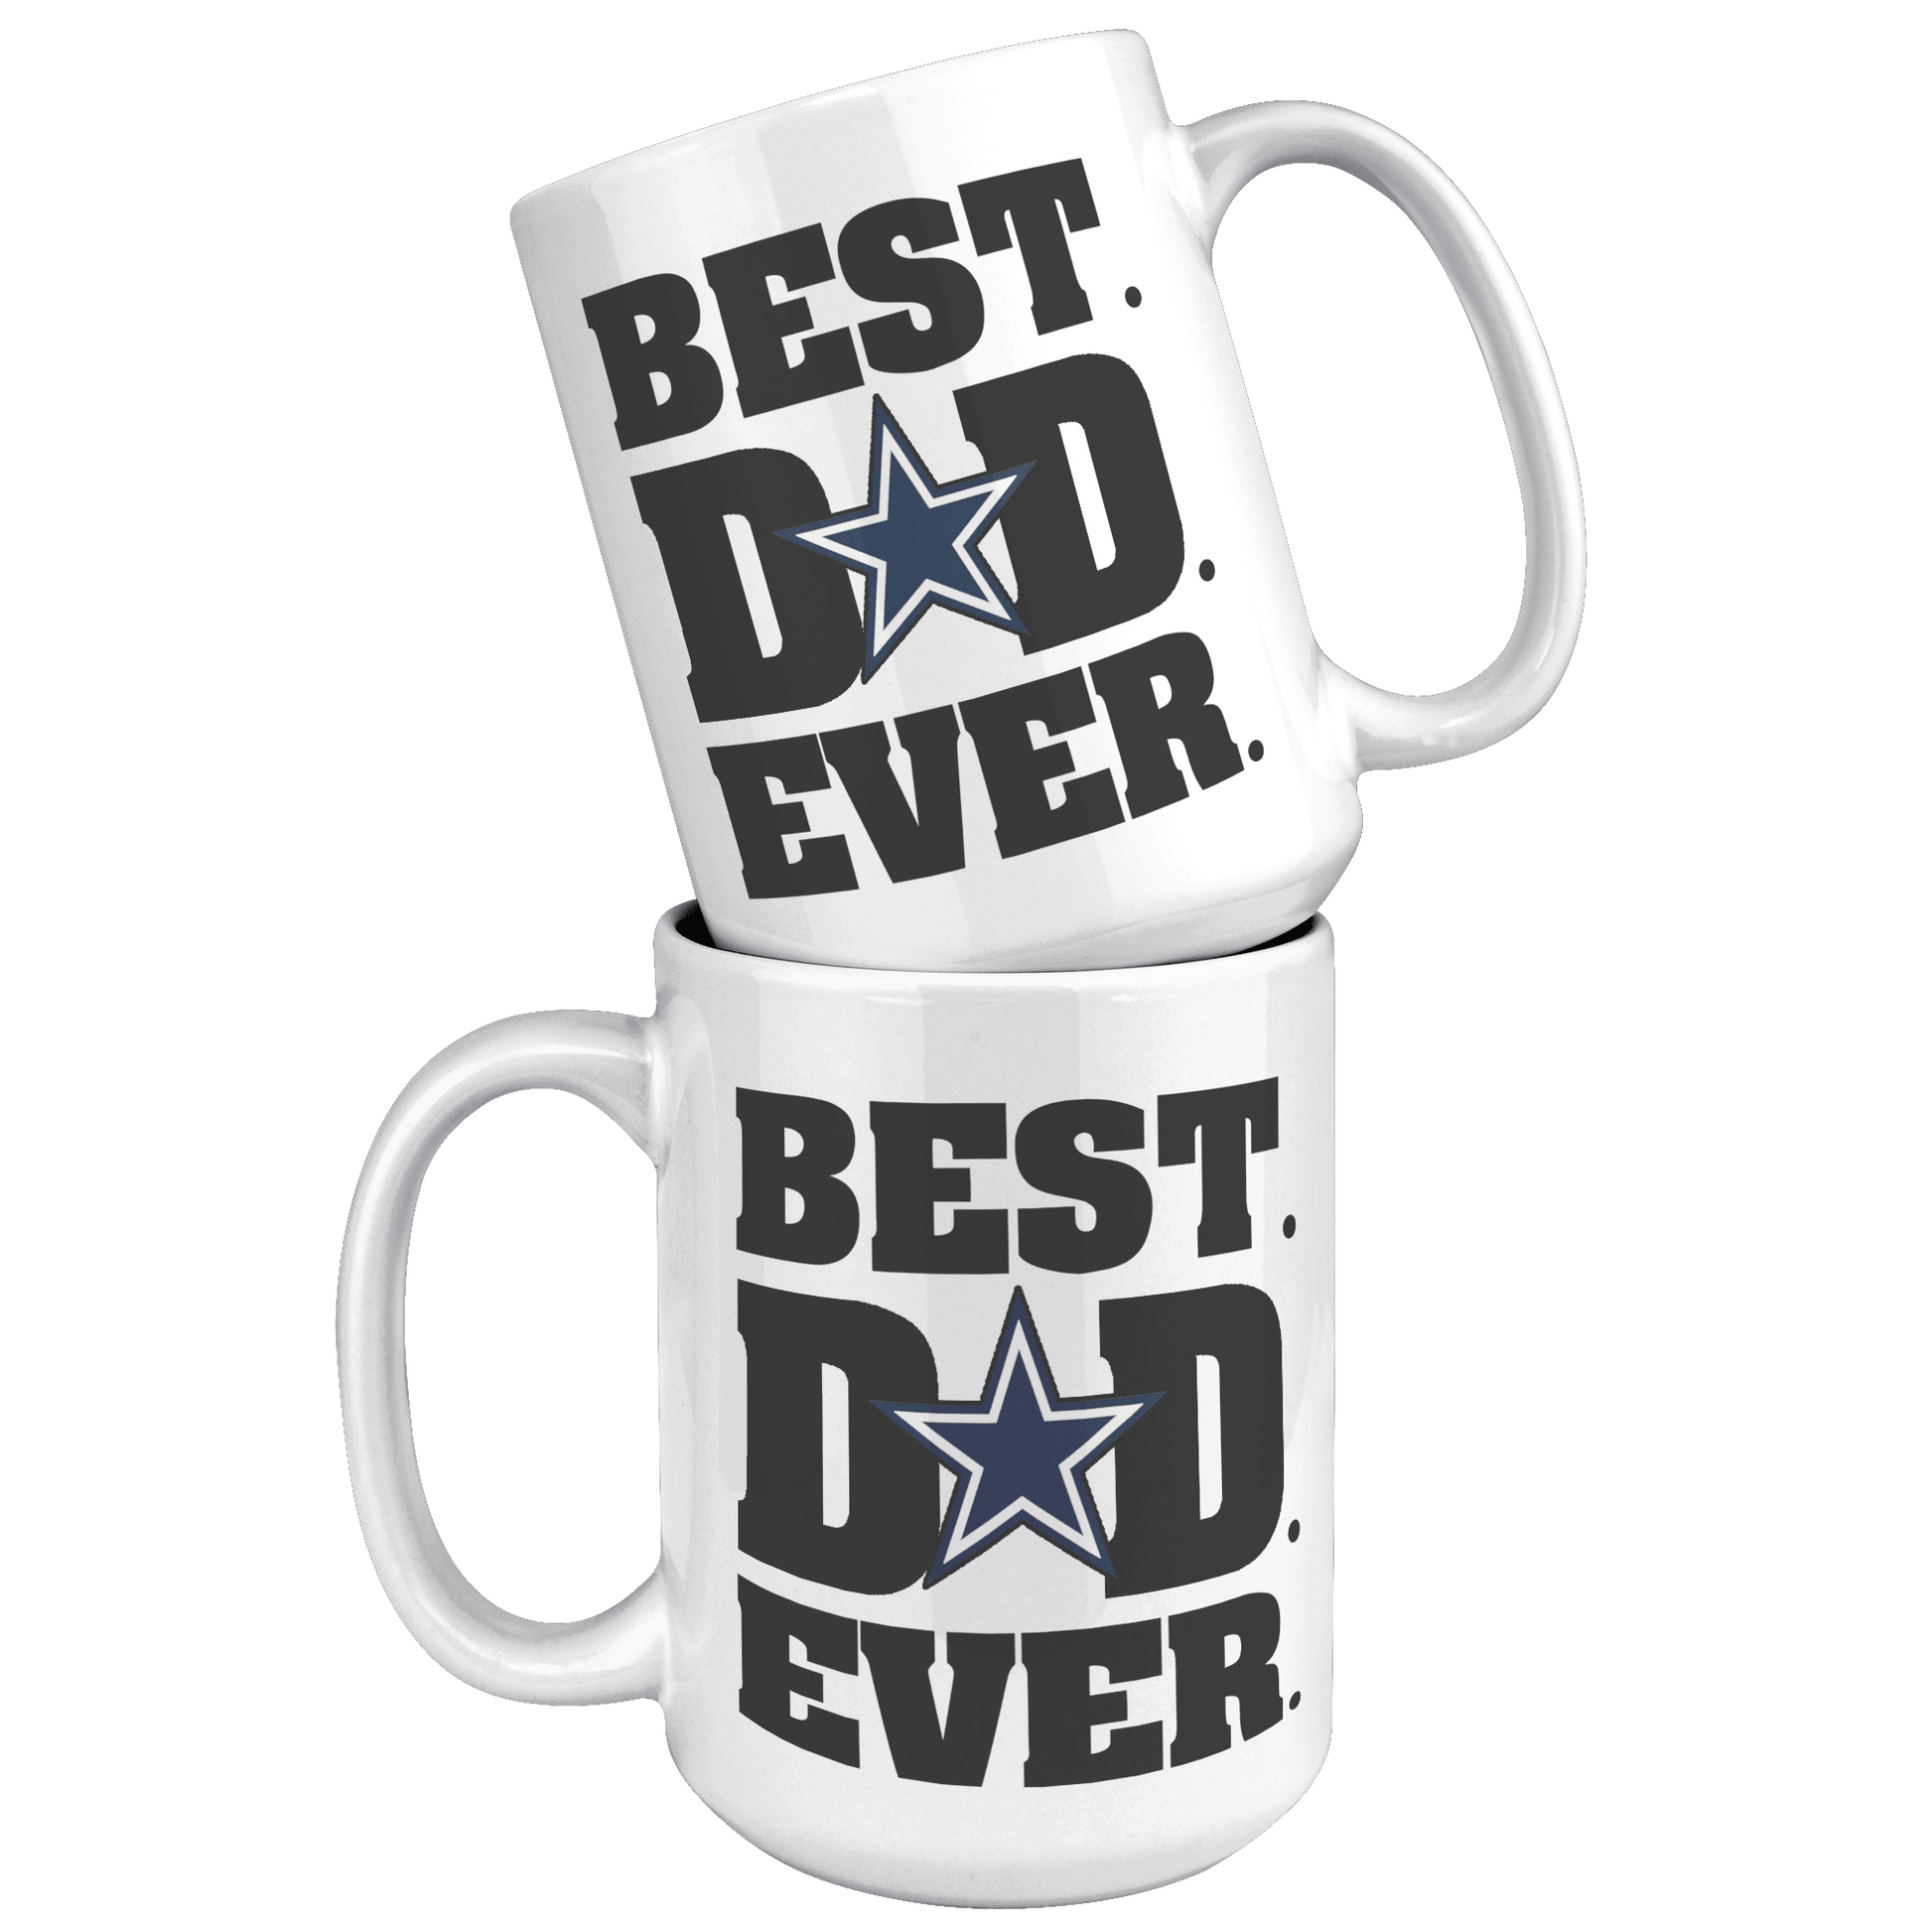 Grandpa I Love You More Than You Love The Dallas Cowboys Fans Gift Coffee  Mug